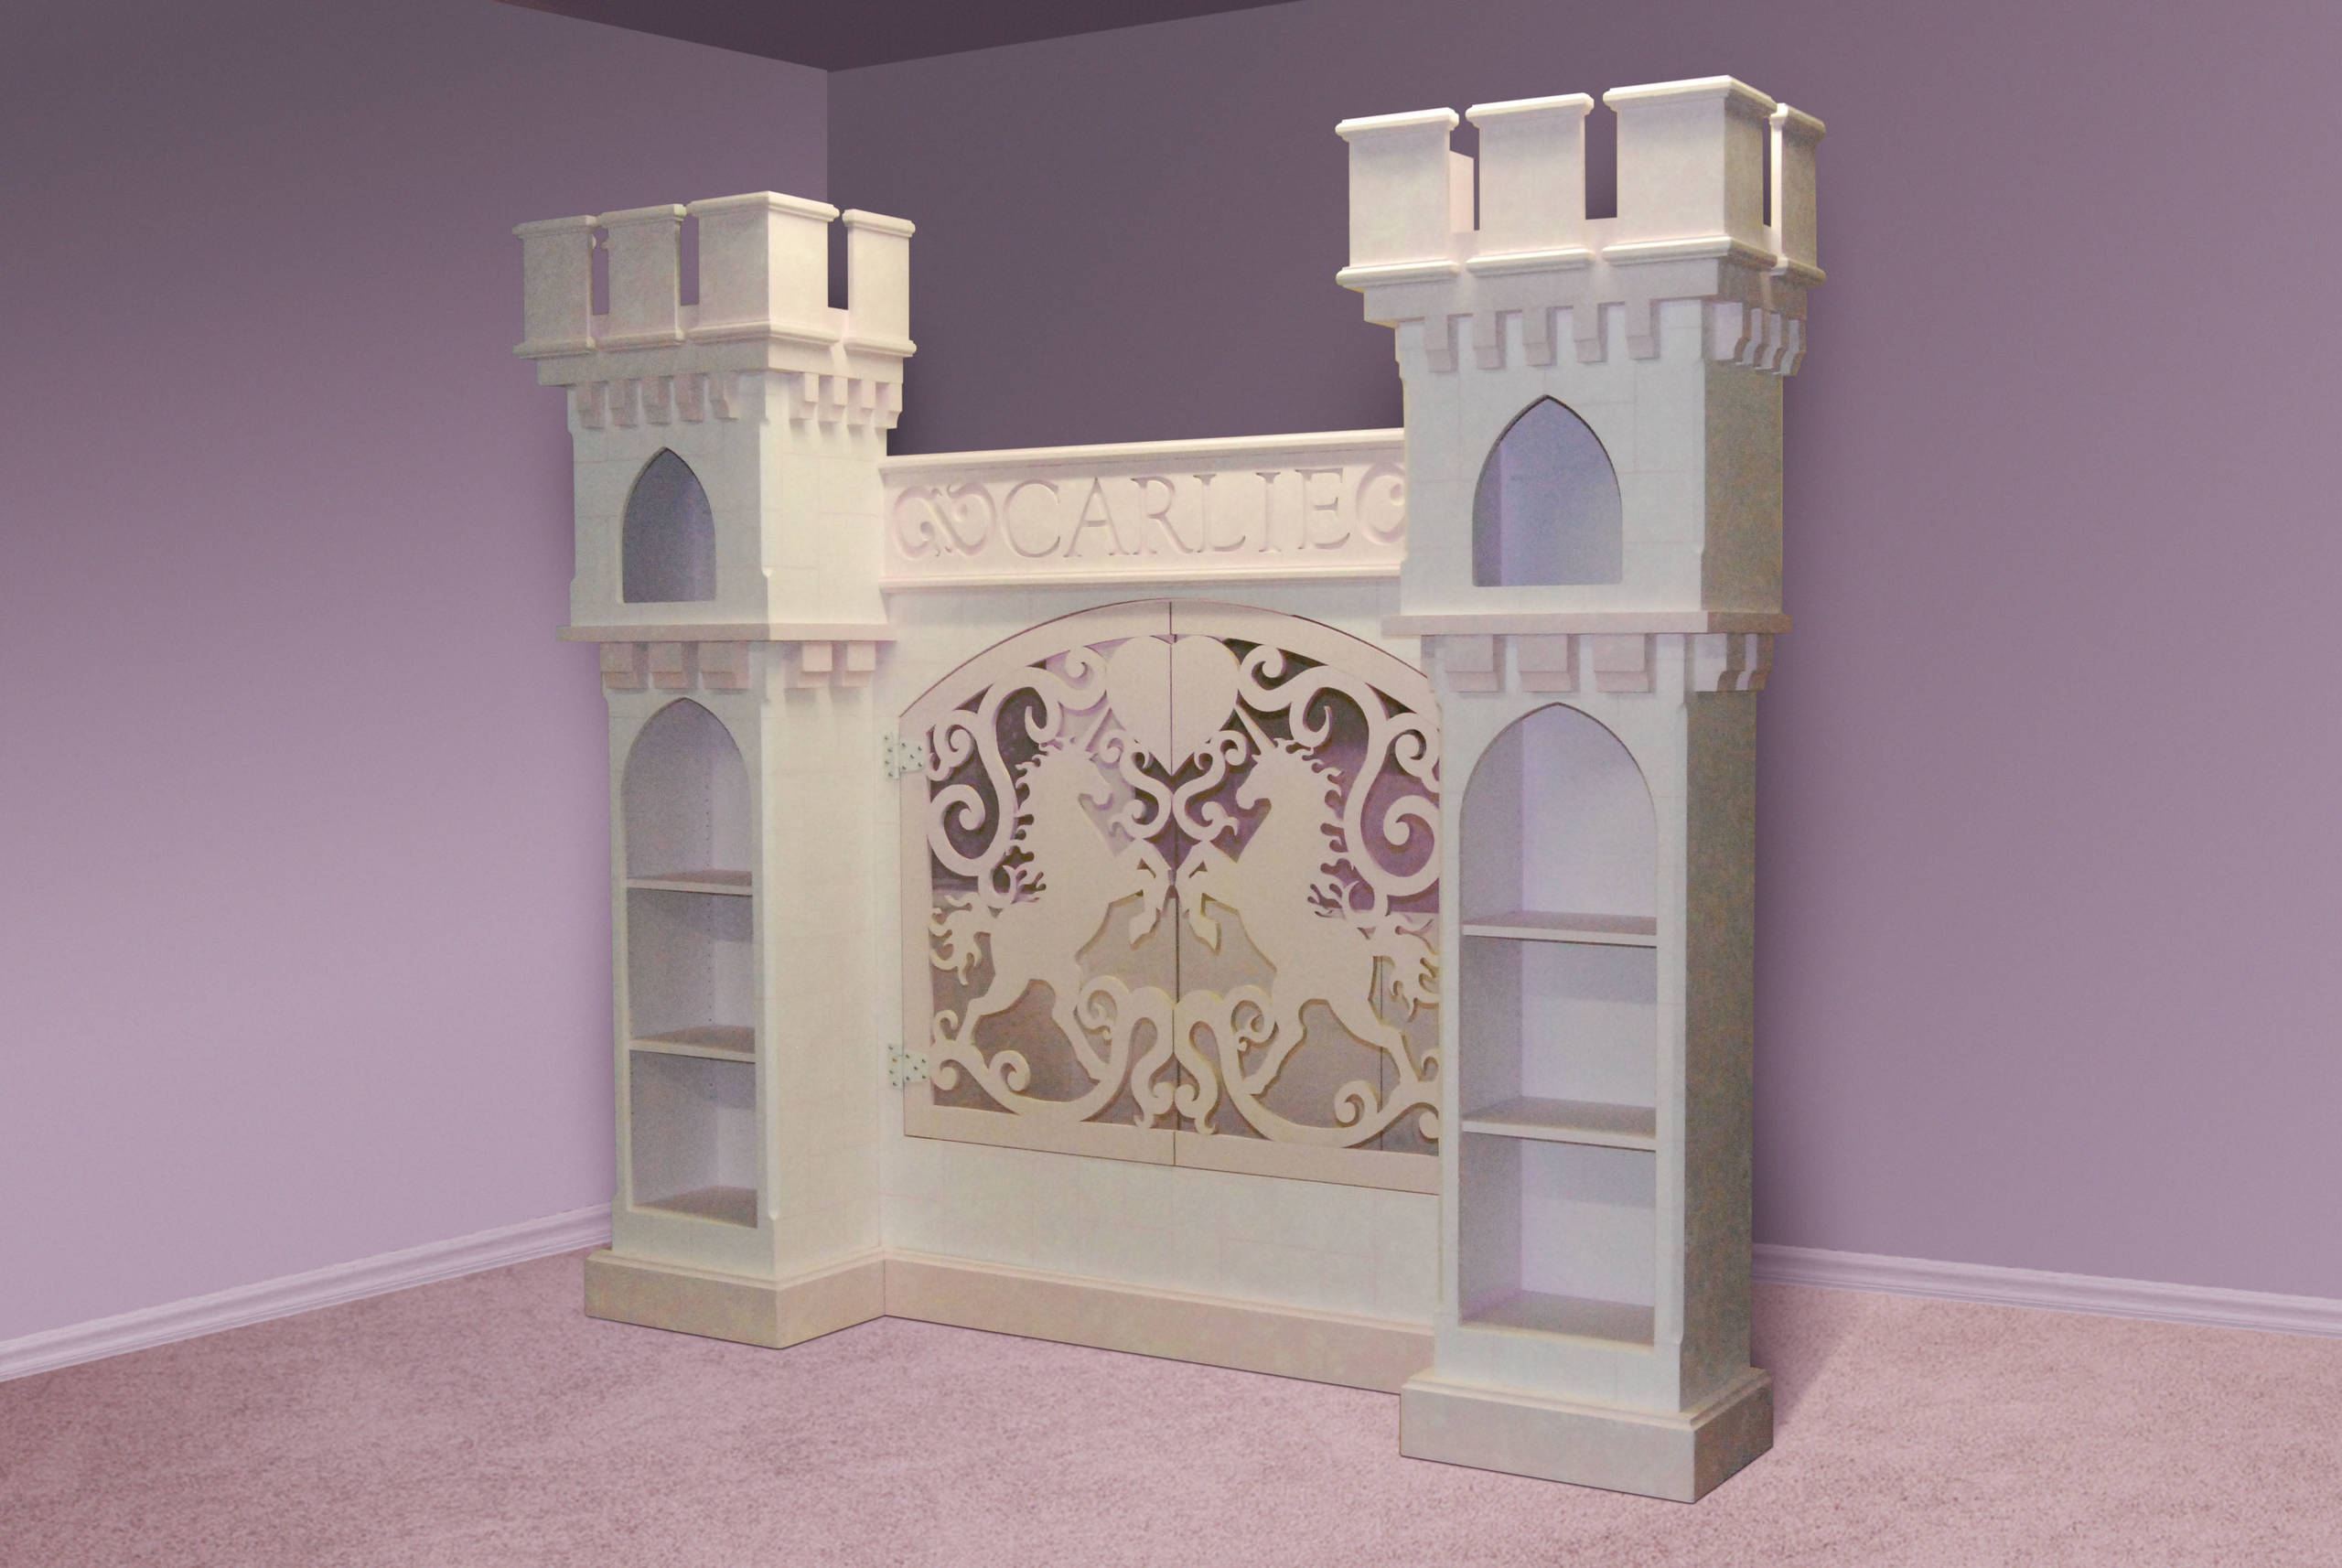 girls princess castle bed